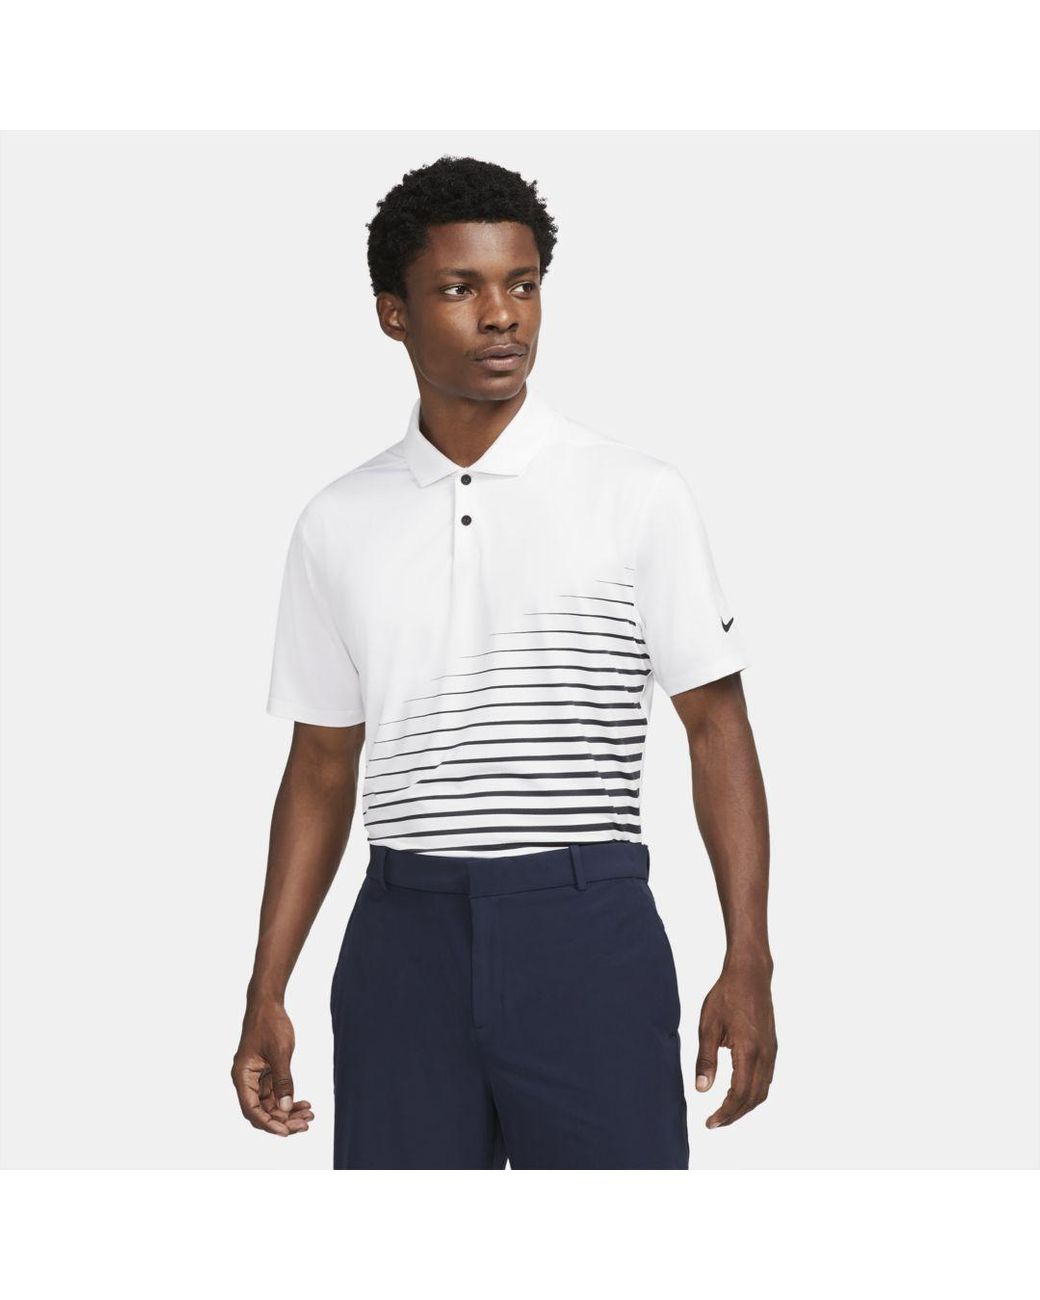 Nike Dri-fit Vapor Graphic Golf Polo in White,Black,Black (White) for ...